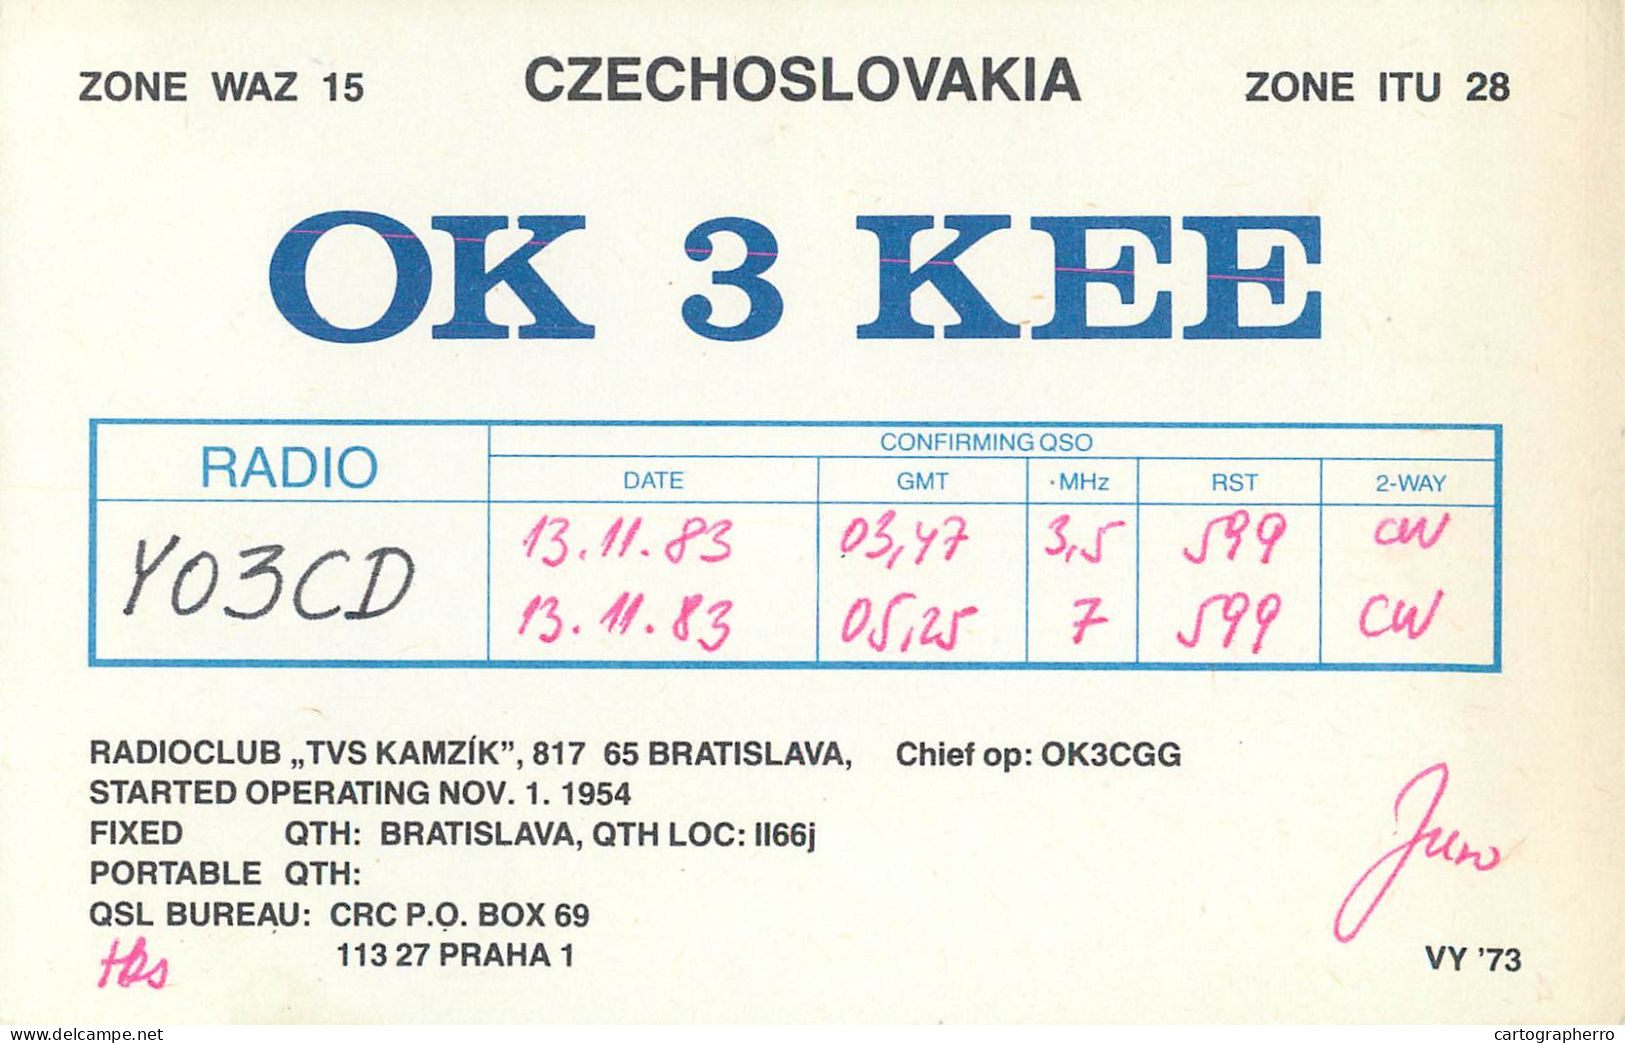 QSL Card Czechoslovakia Radio Amateur Station OK3KEE Y03CD - Amateurfunk